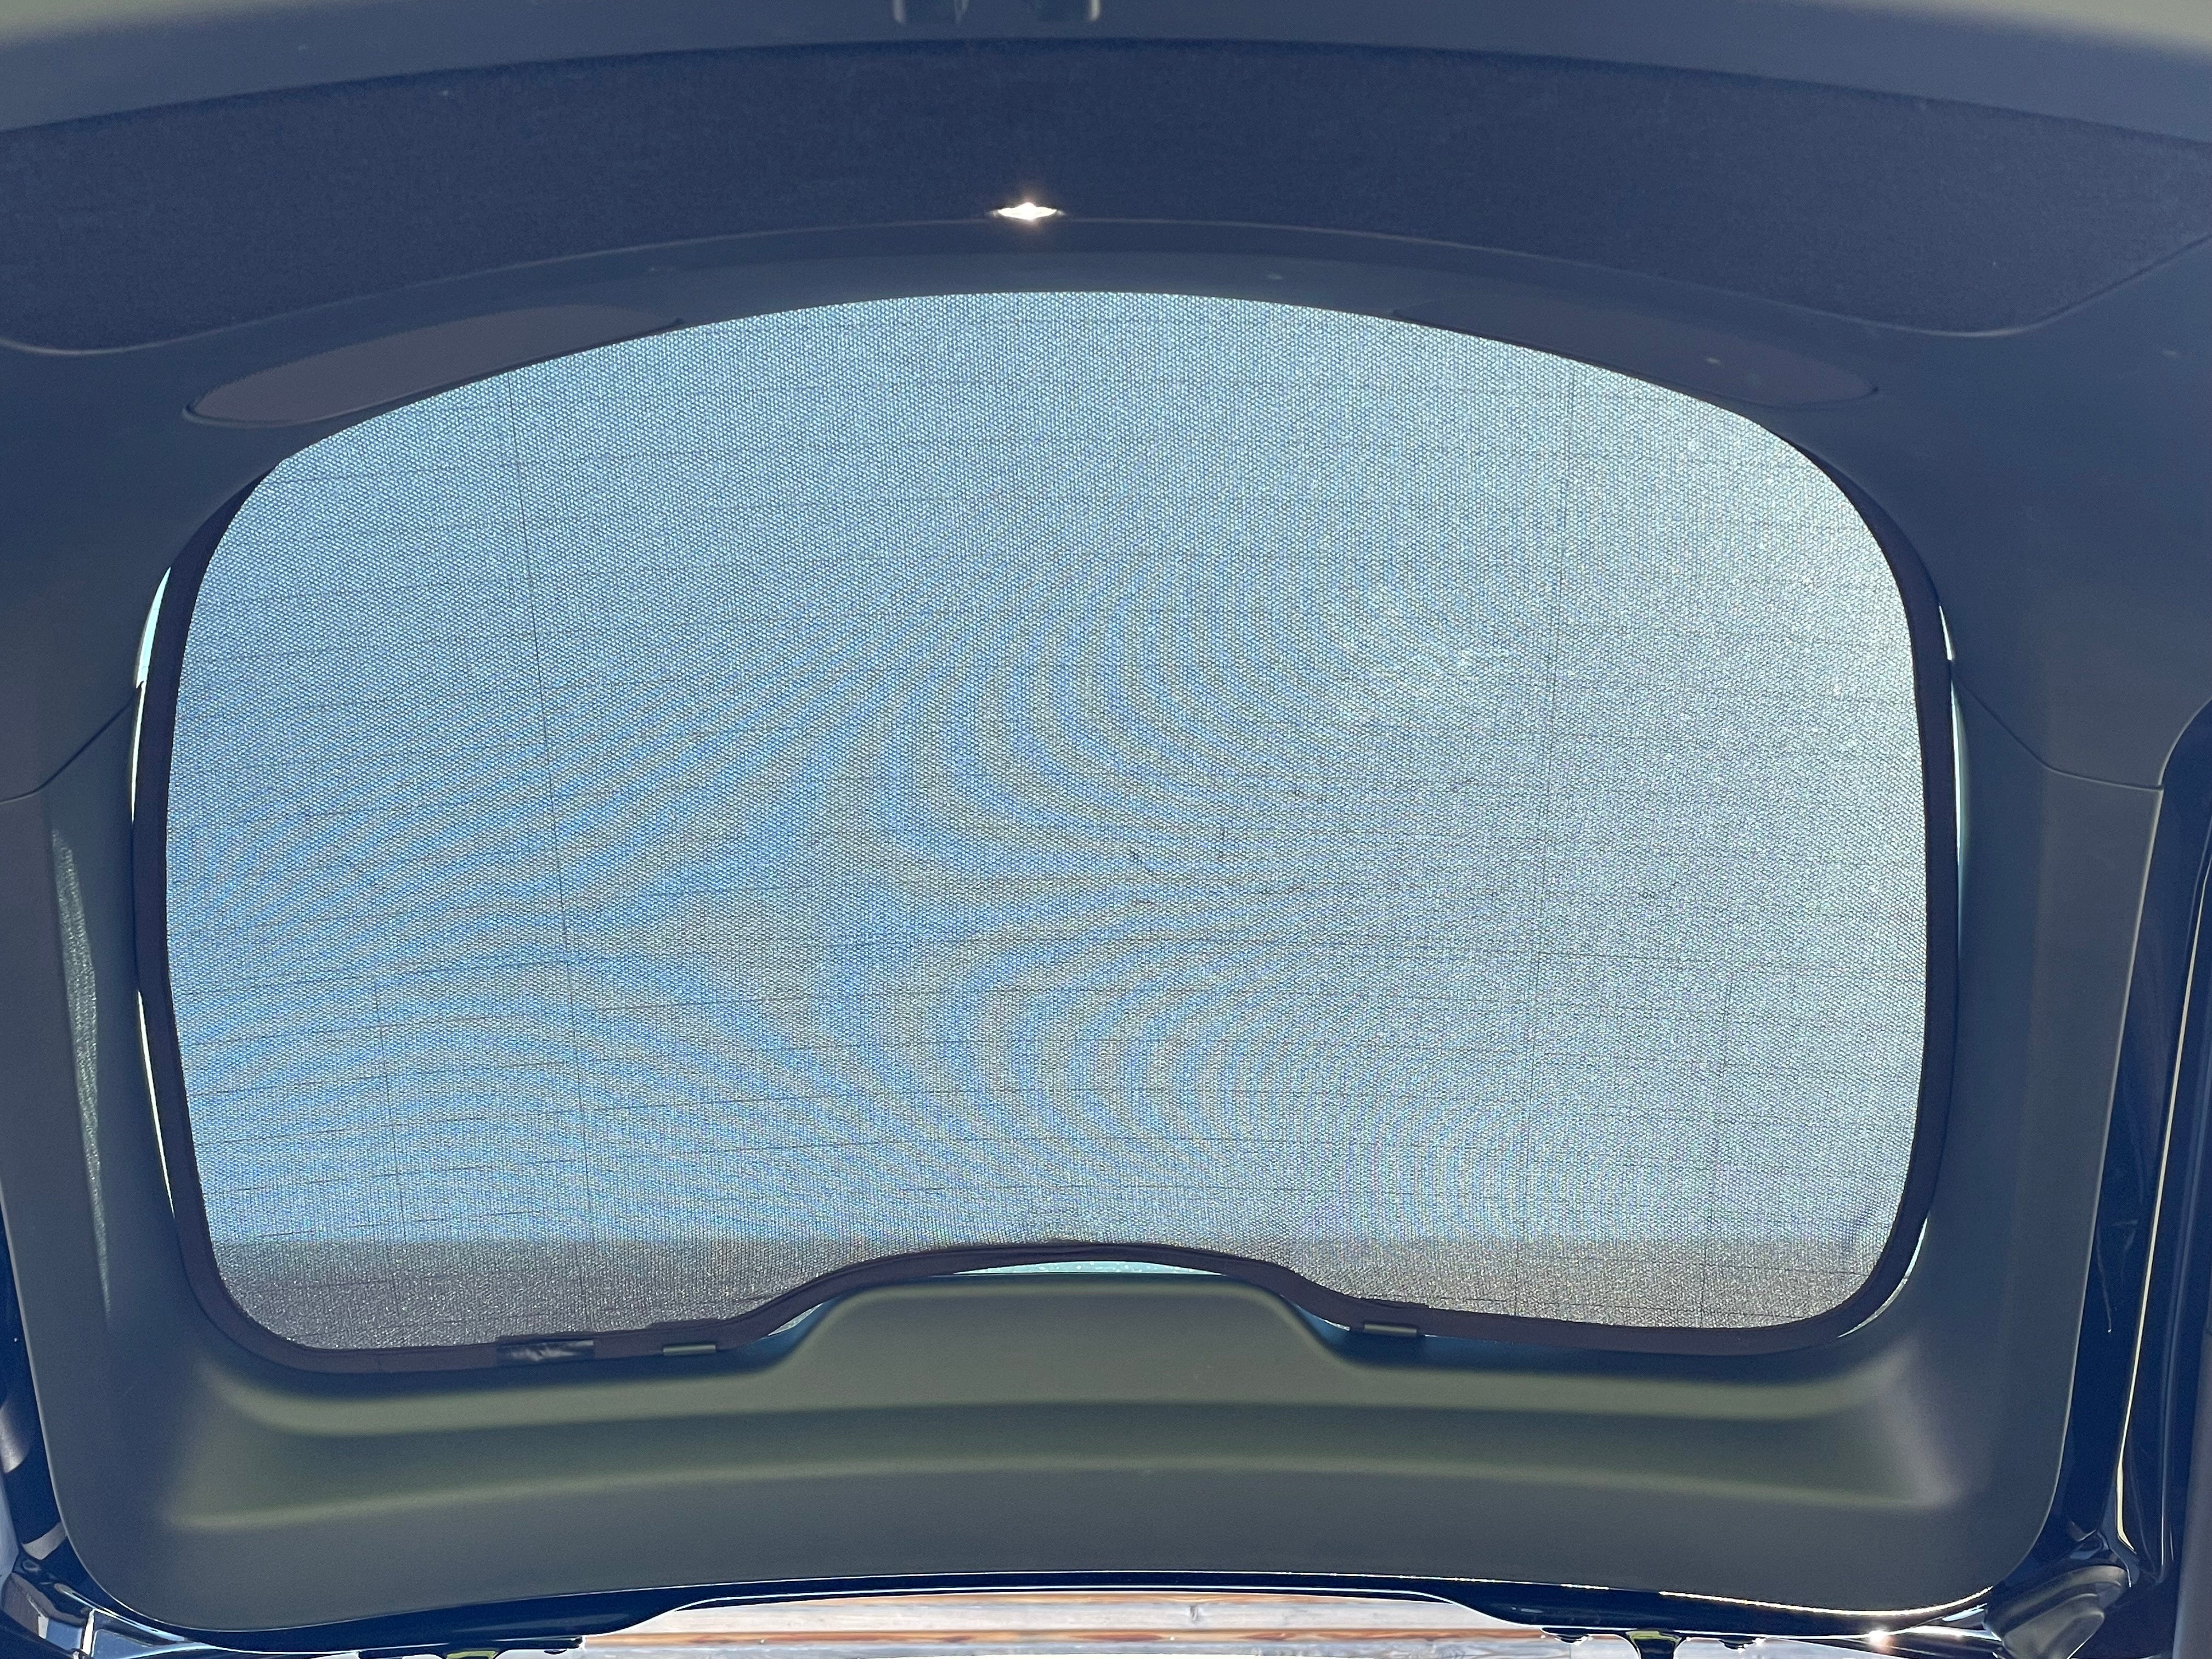 Sun protection element rear window Tesla Model Y – E-Mobility Shop